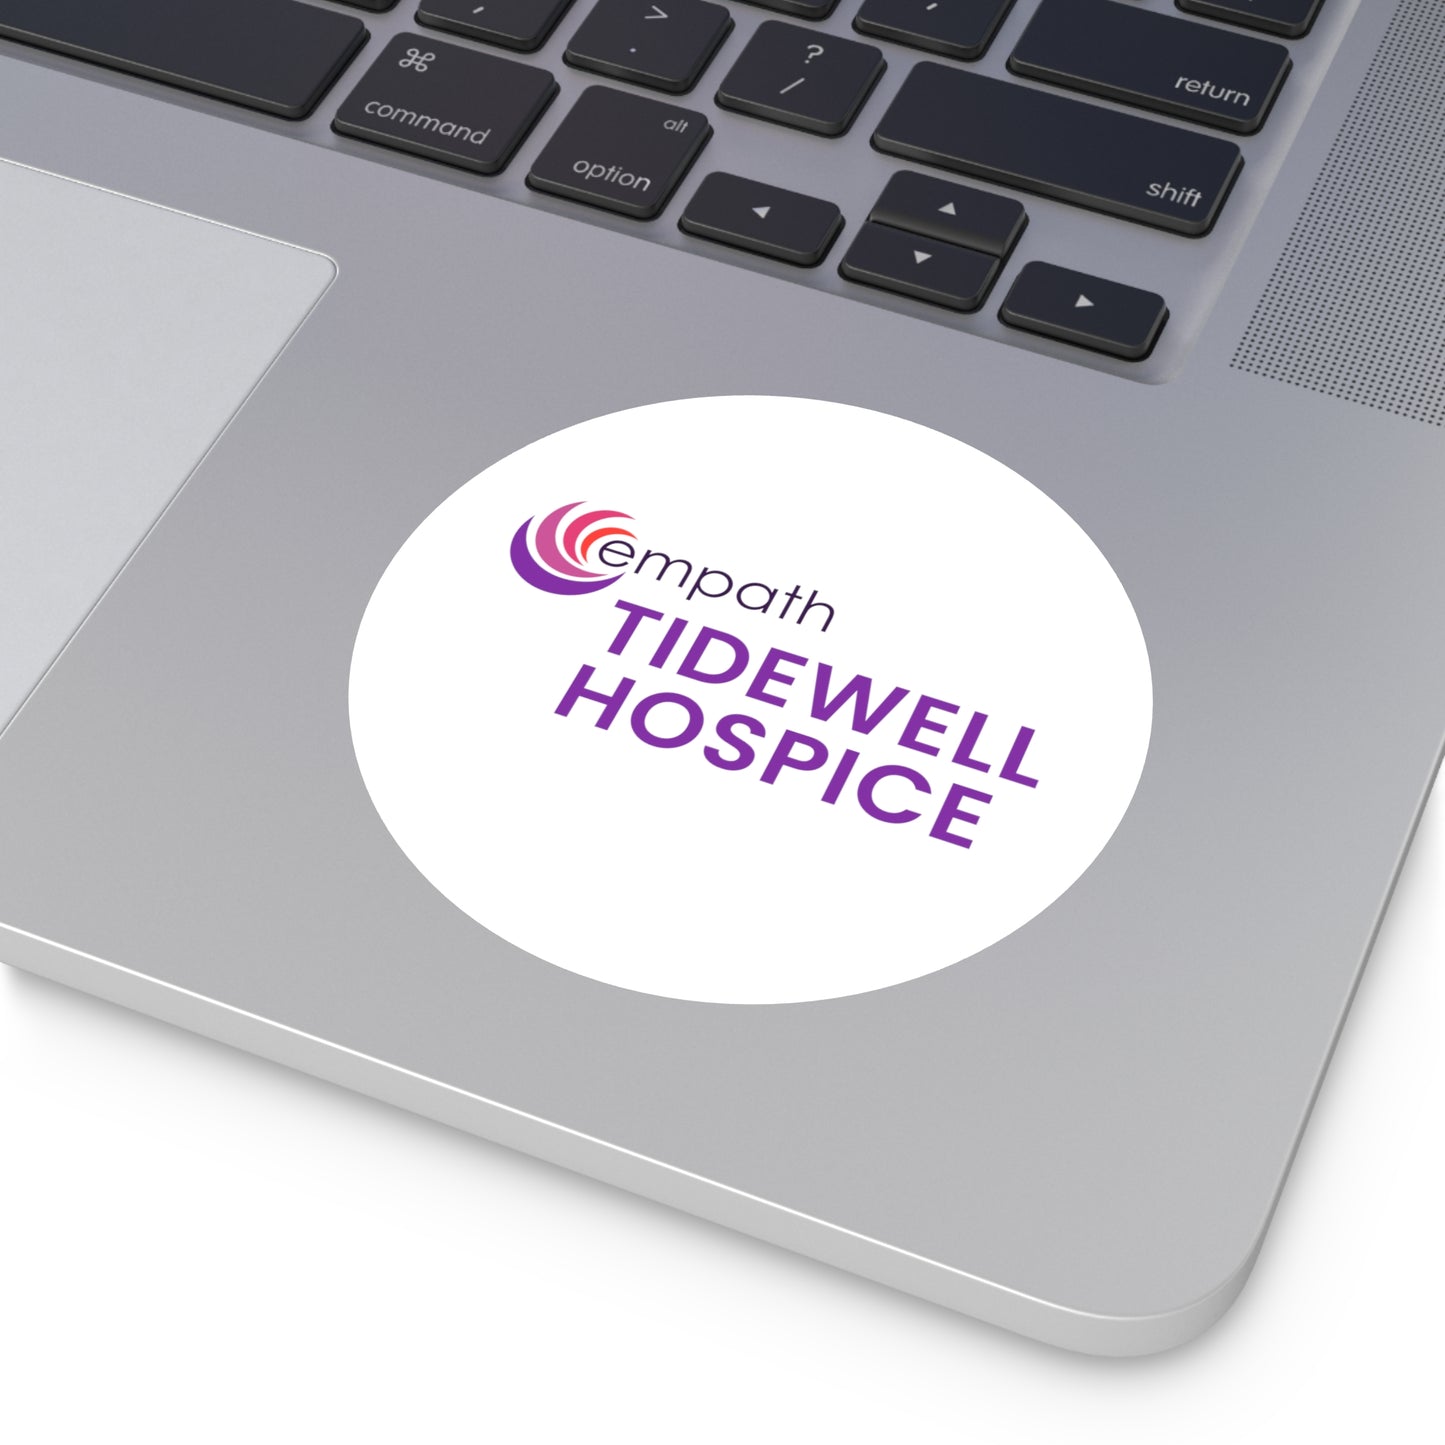 Round Vinyl Stickers - Tidewell Hospice